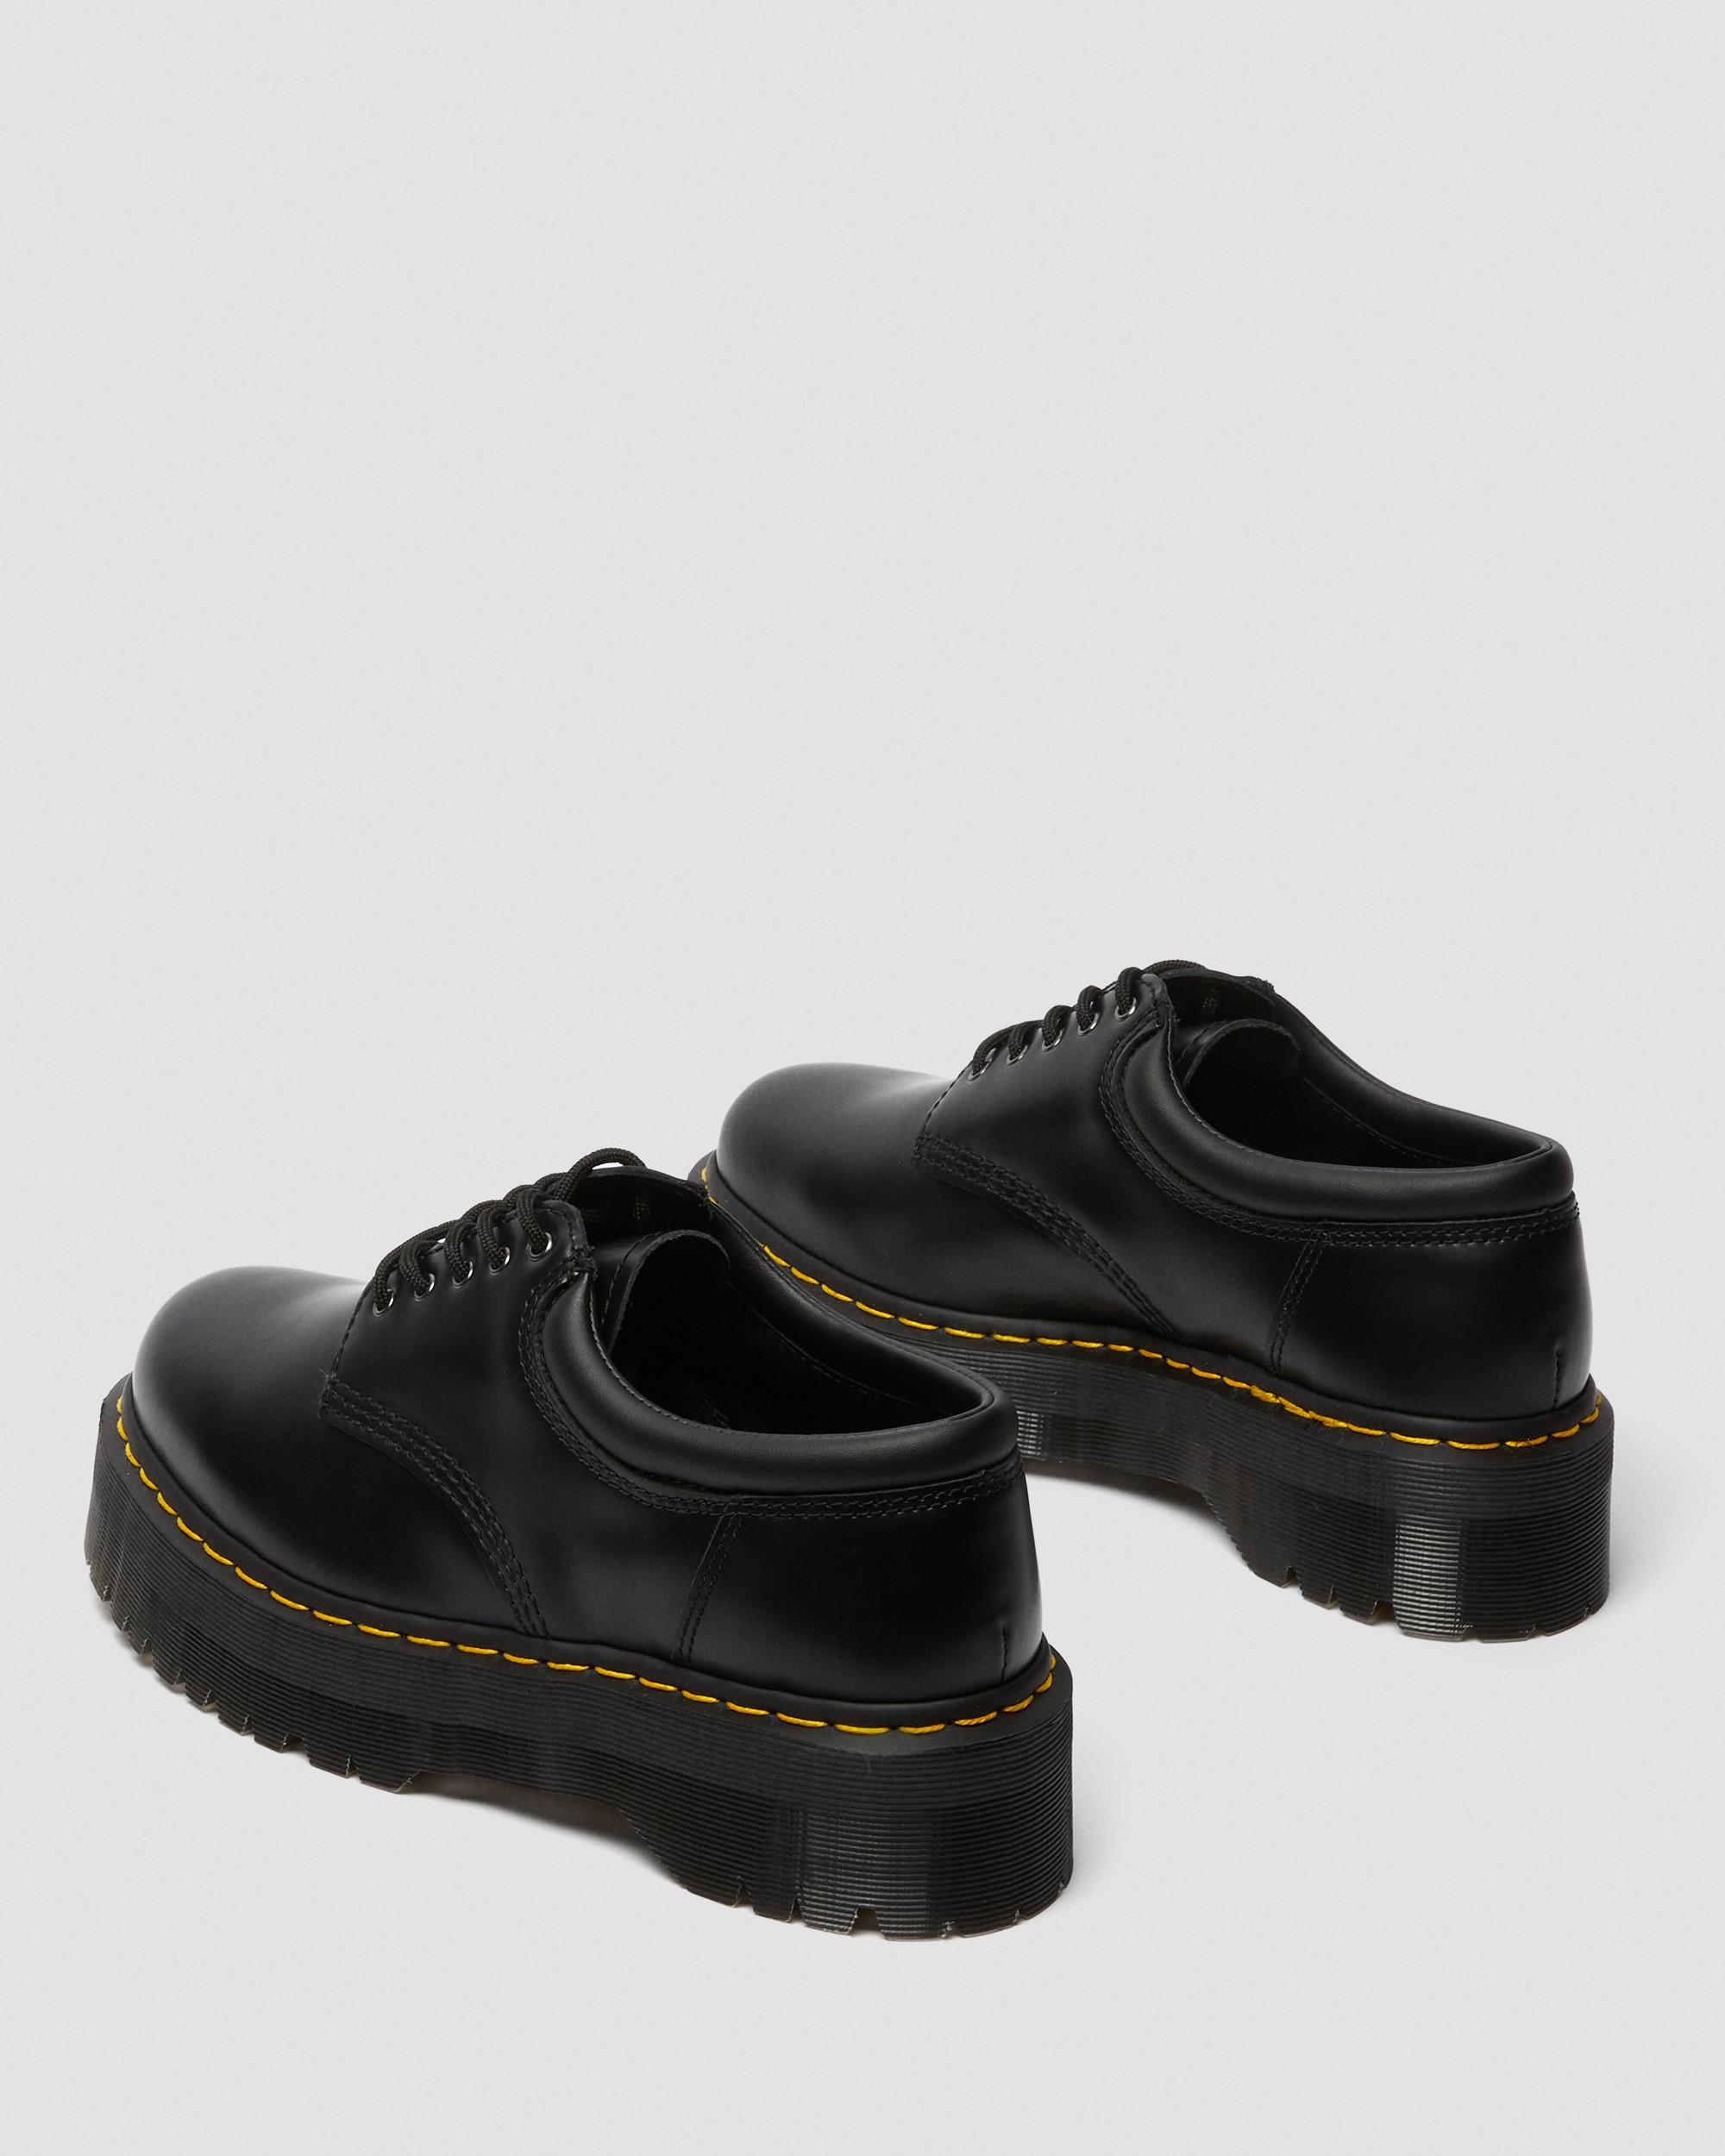 8053 Quad Smooth Leather Platform Shoes in Black